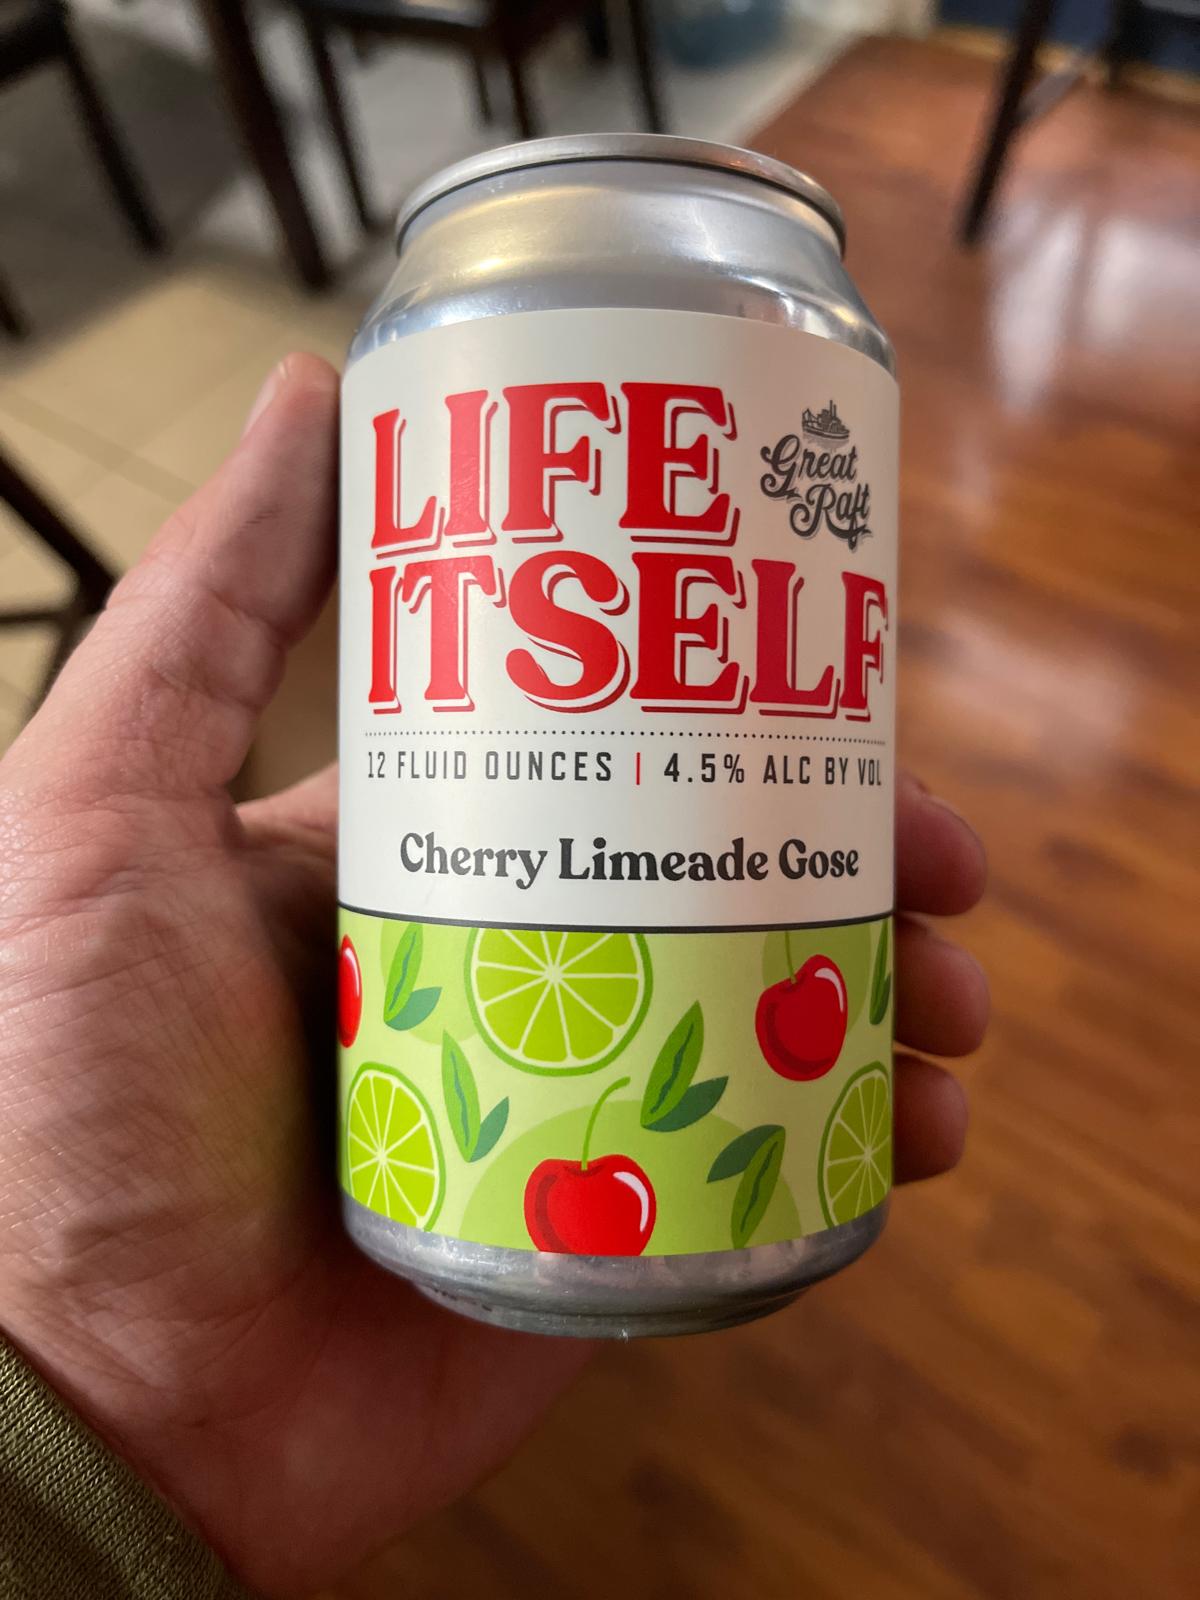 Life Itslef Cherry Limeade